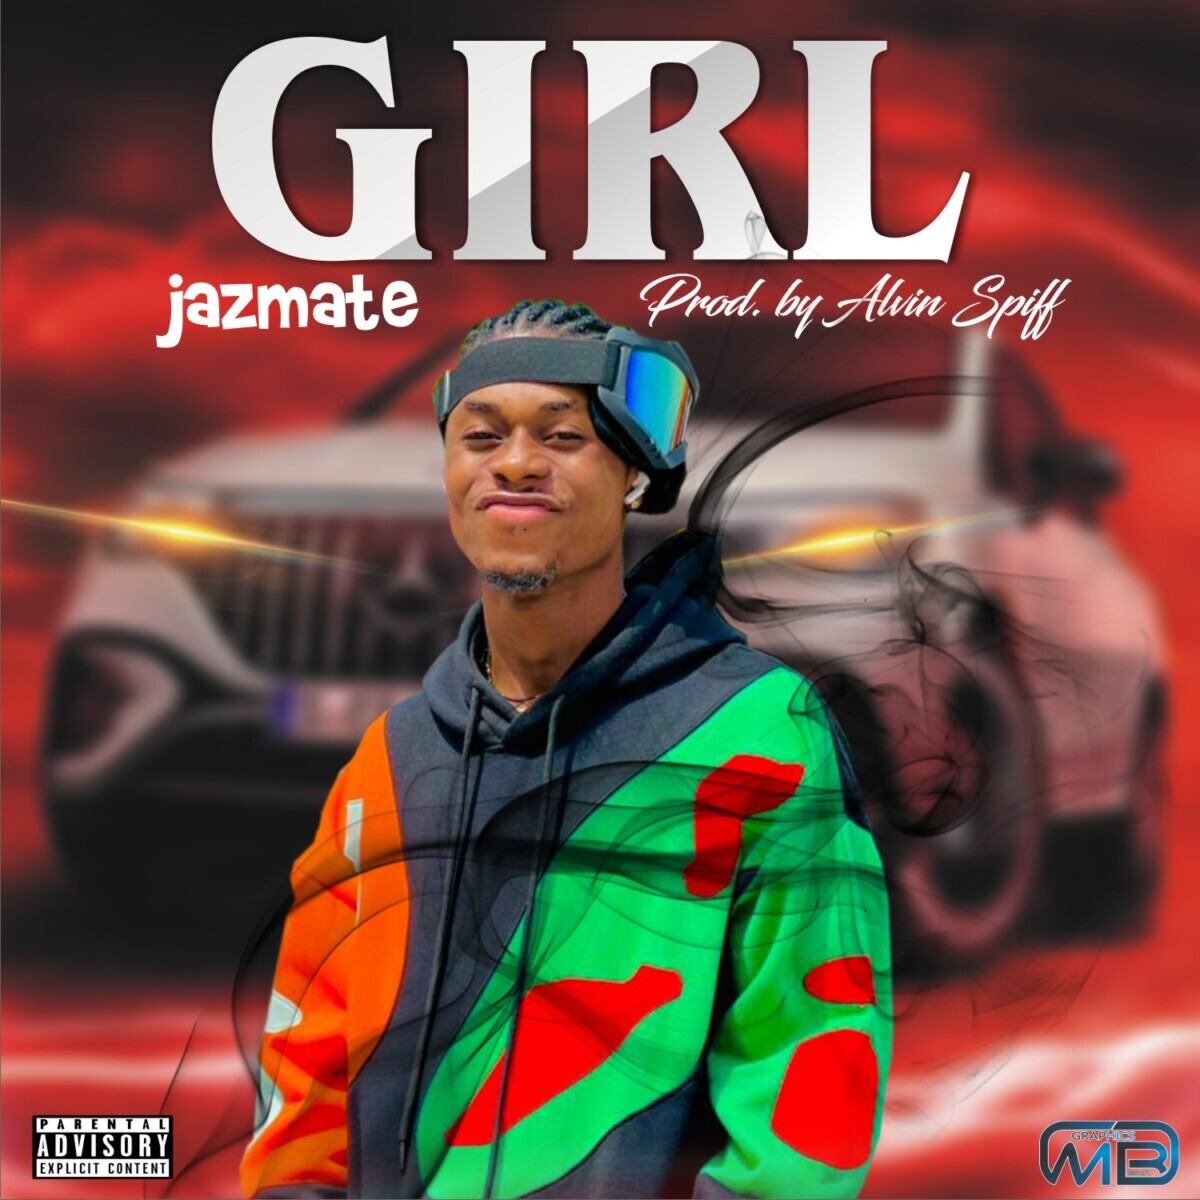 Music: Jazmate – “Girl”